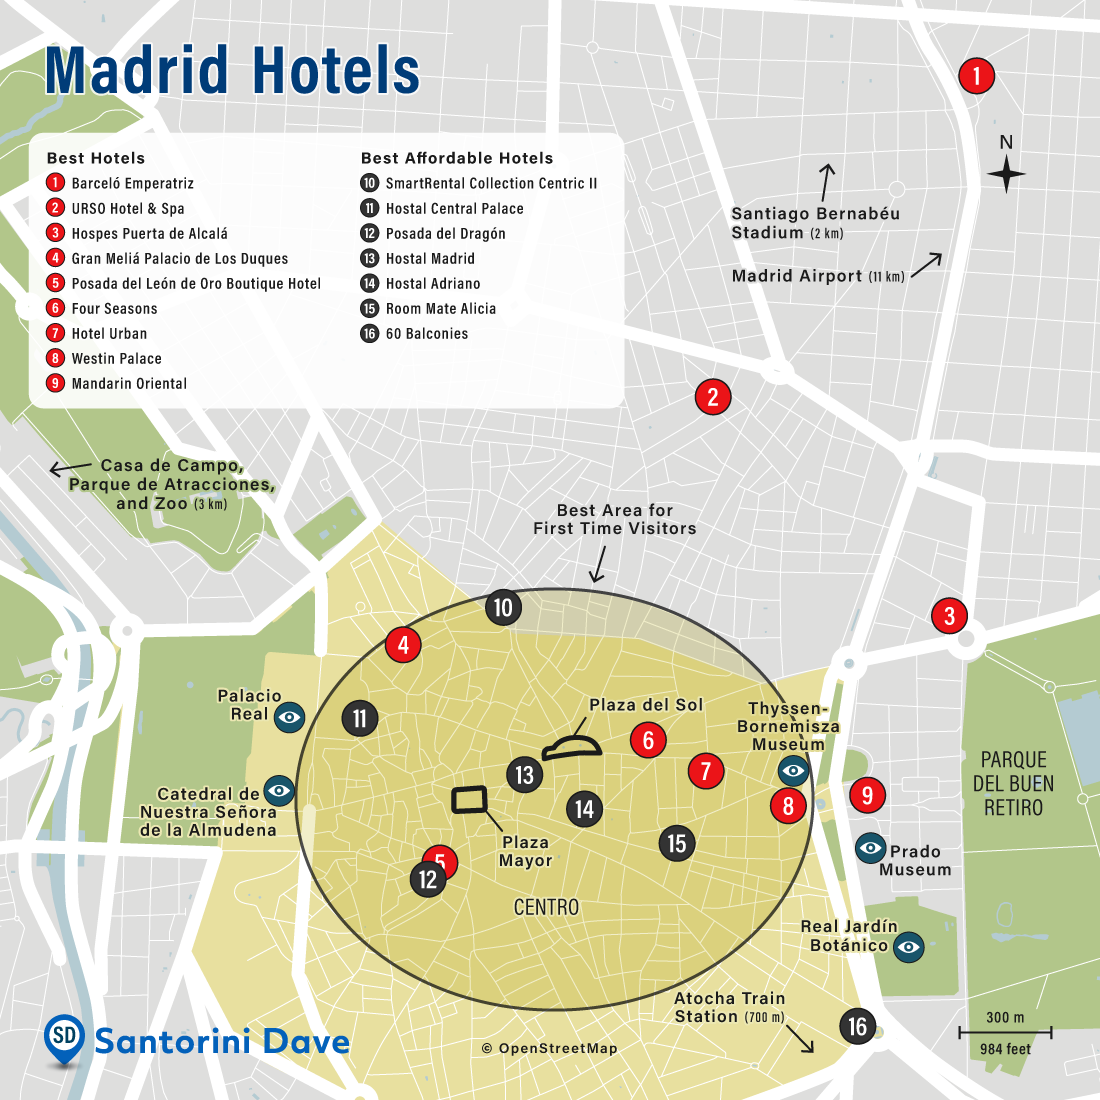 Map of Madrid Hotels and Neighborhoods.